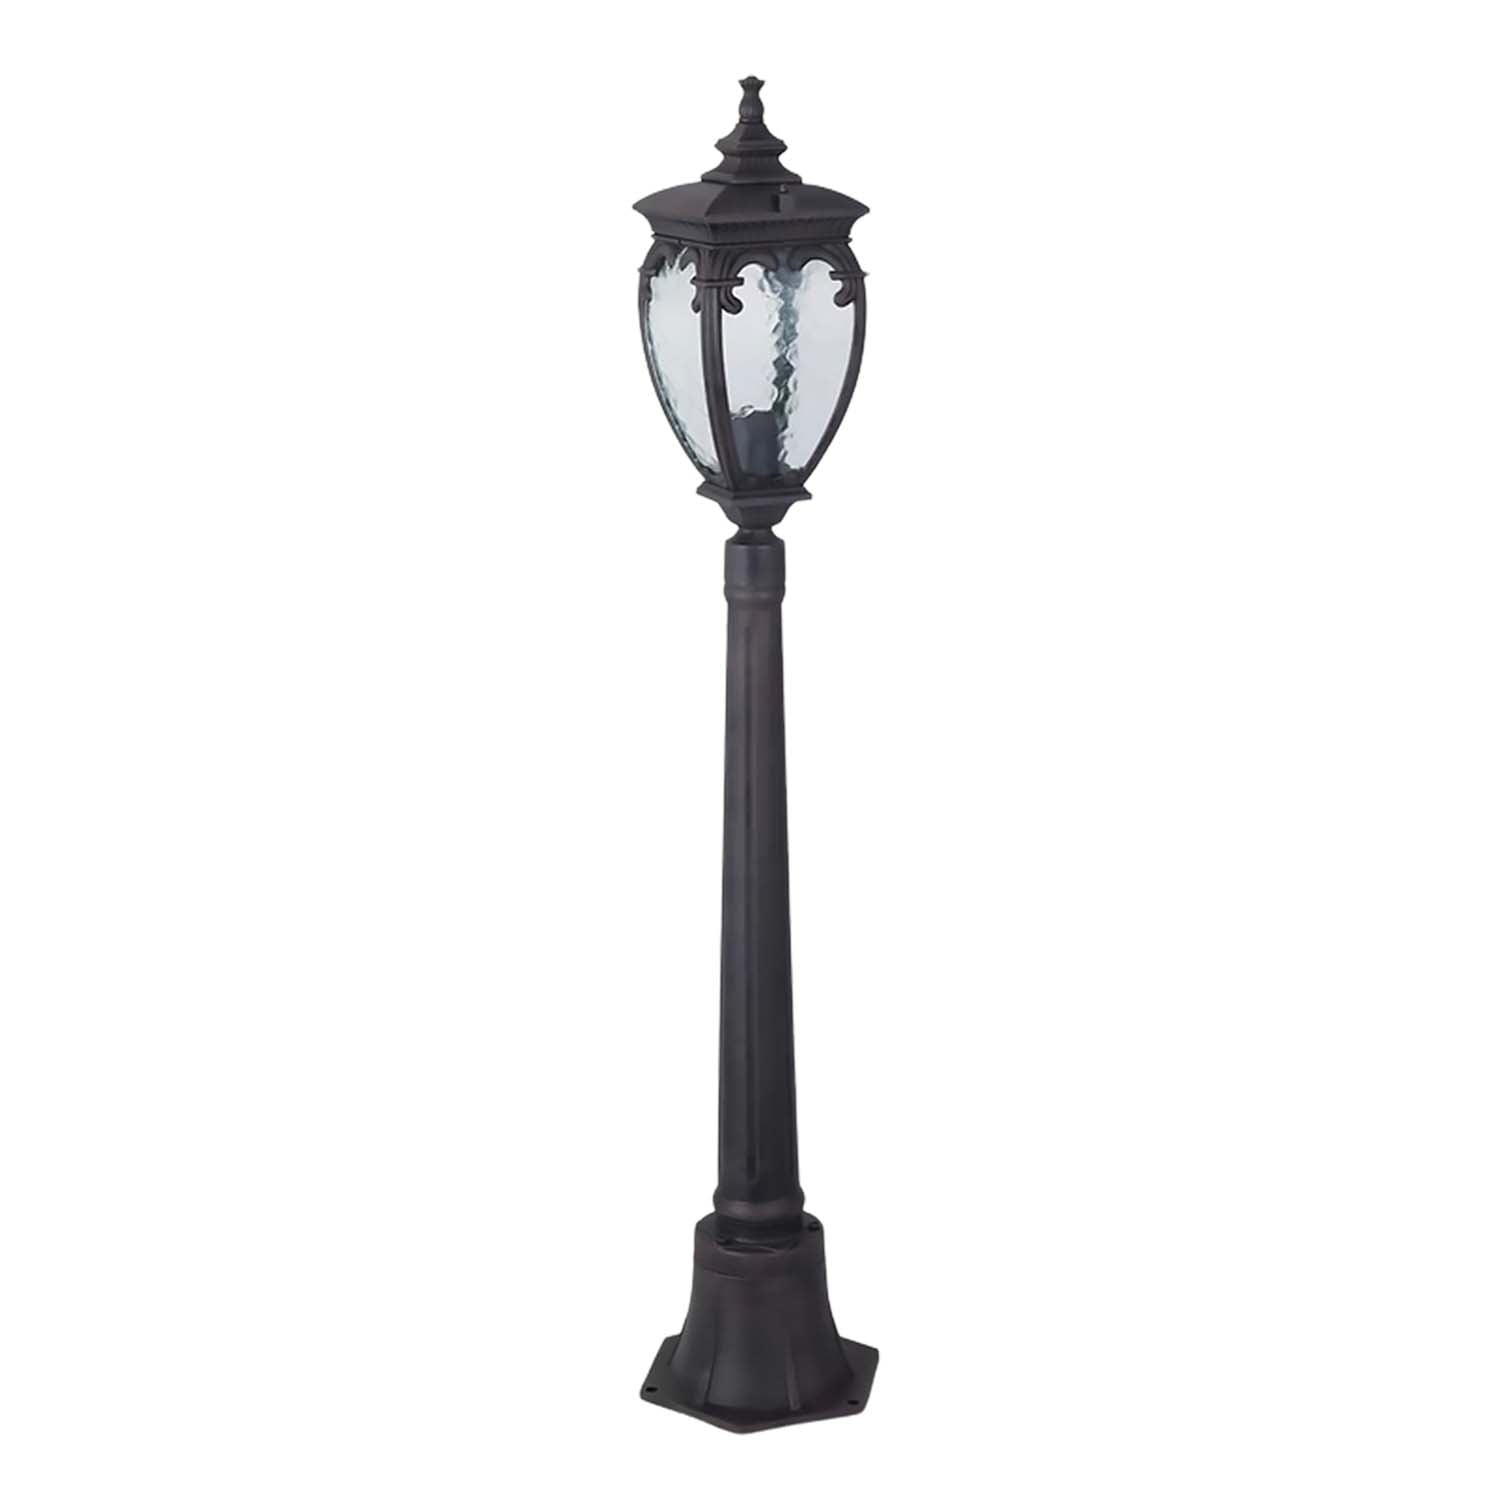 FLEUR A - Vintage Italian style outdoor floor lamp, lantern